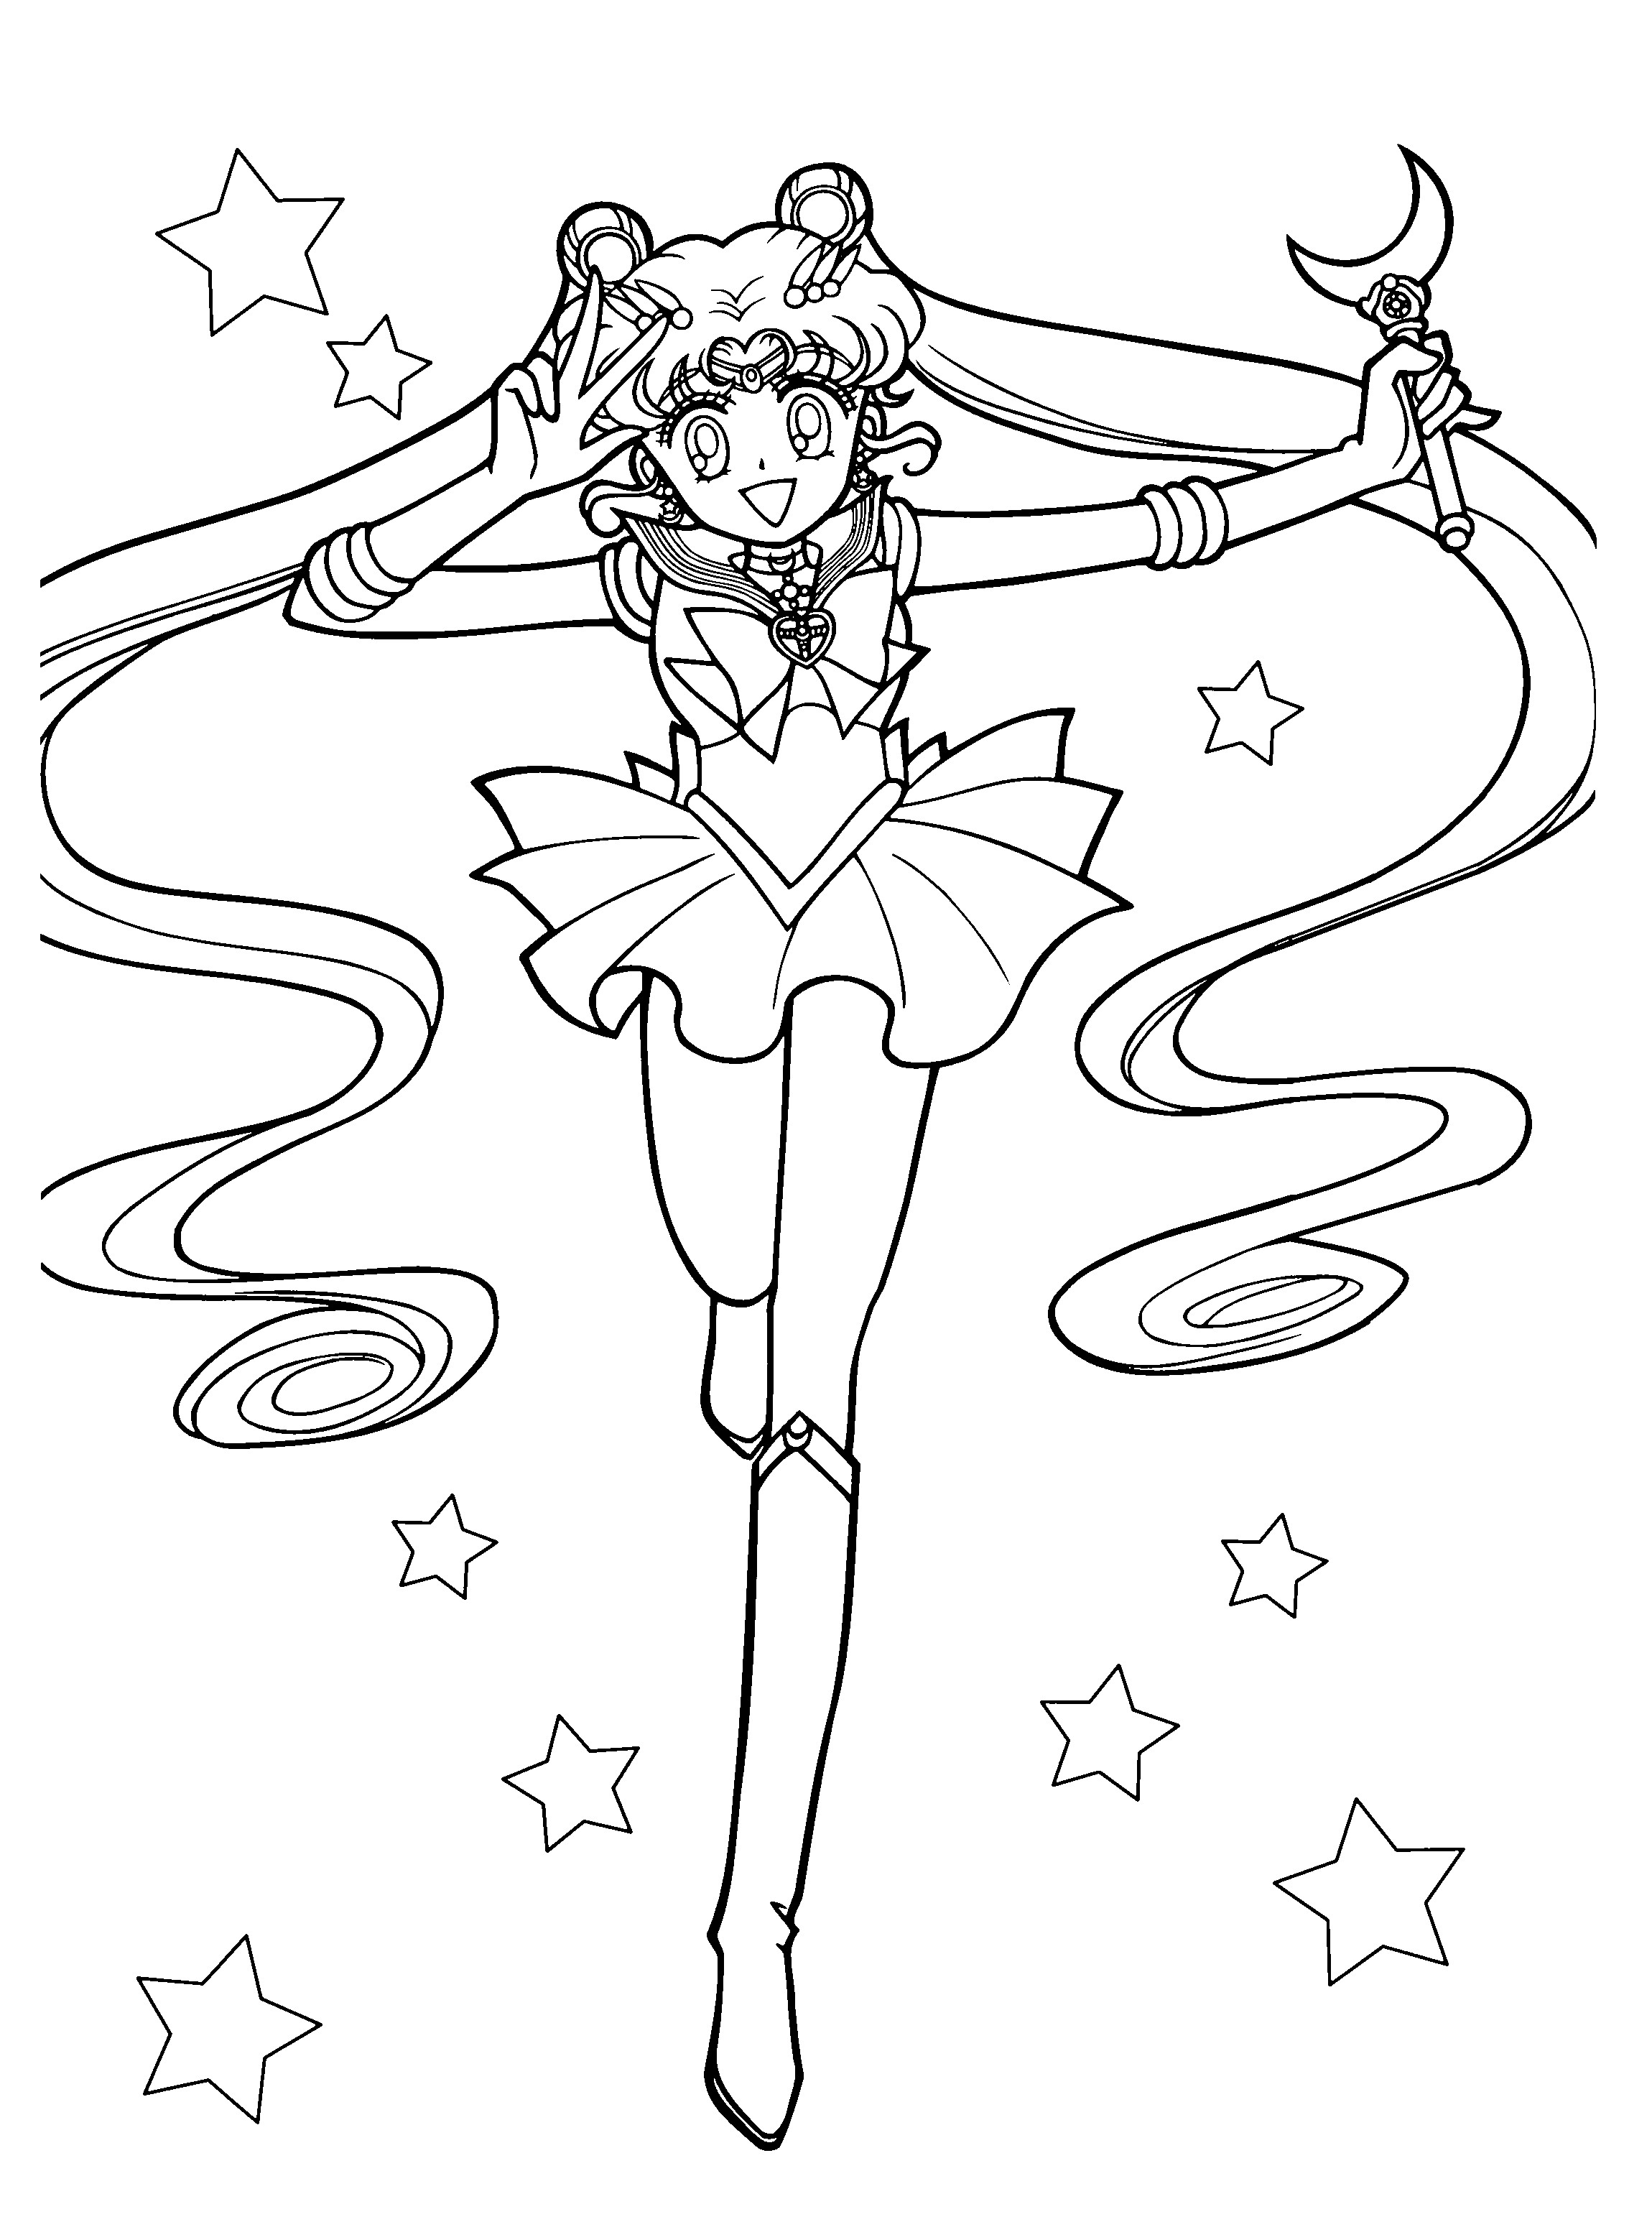 Ausmalbilder Pinterest
 Ausmalbilder Sailor Moon Malvorlagen